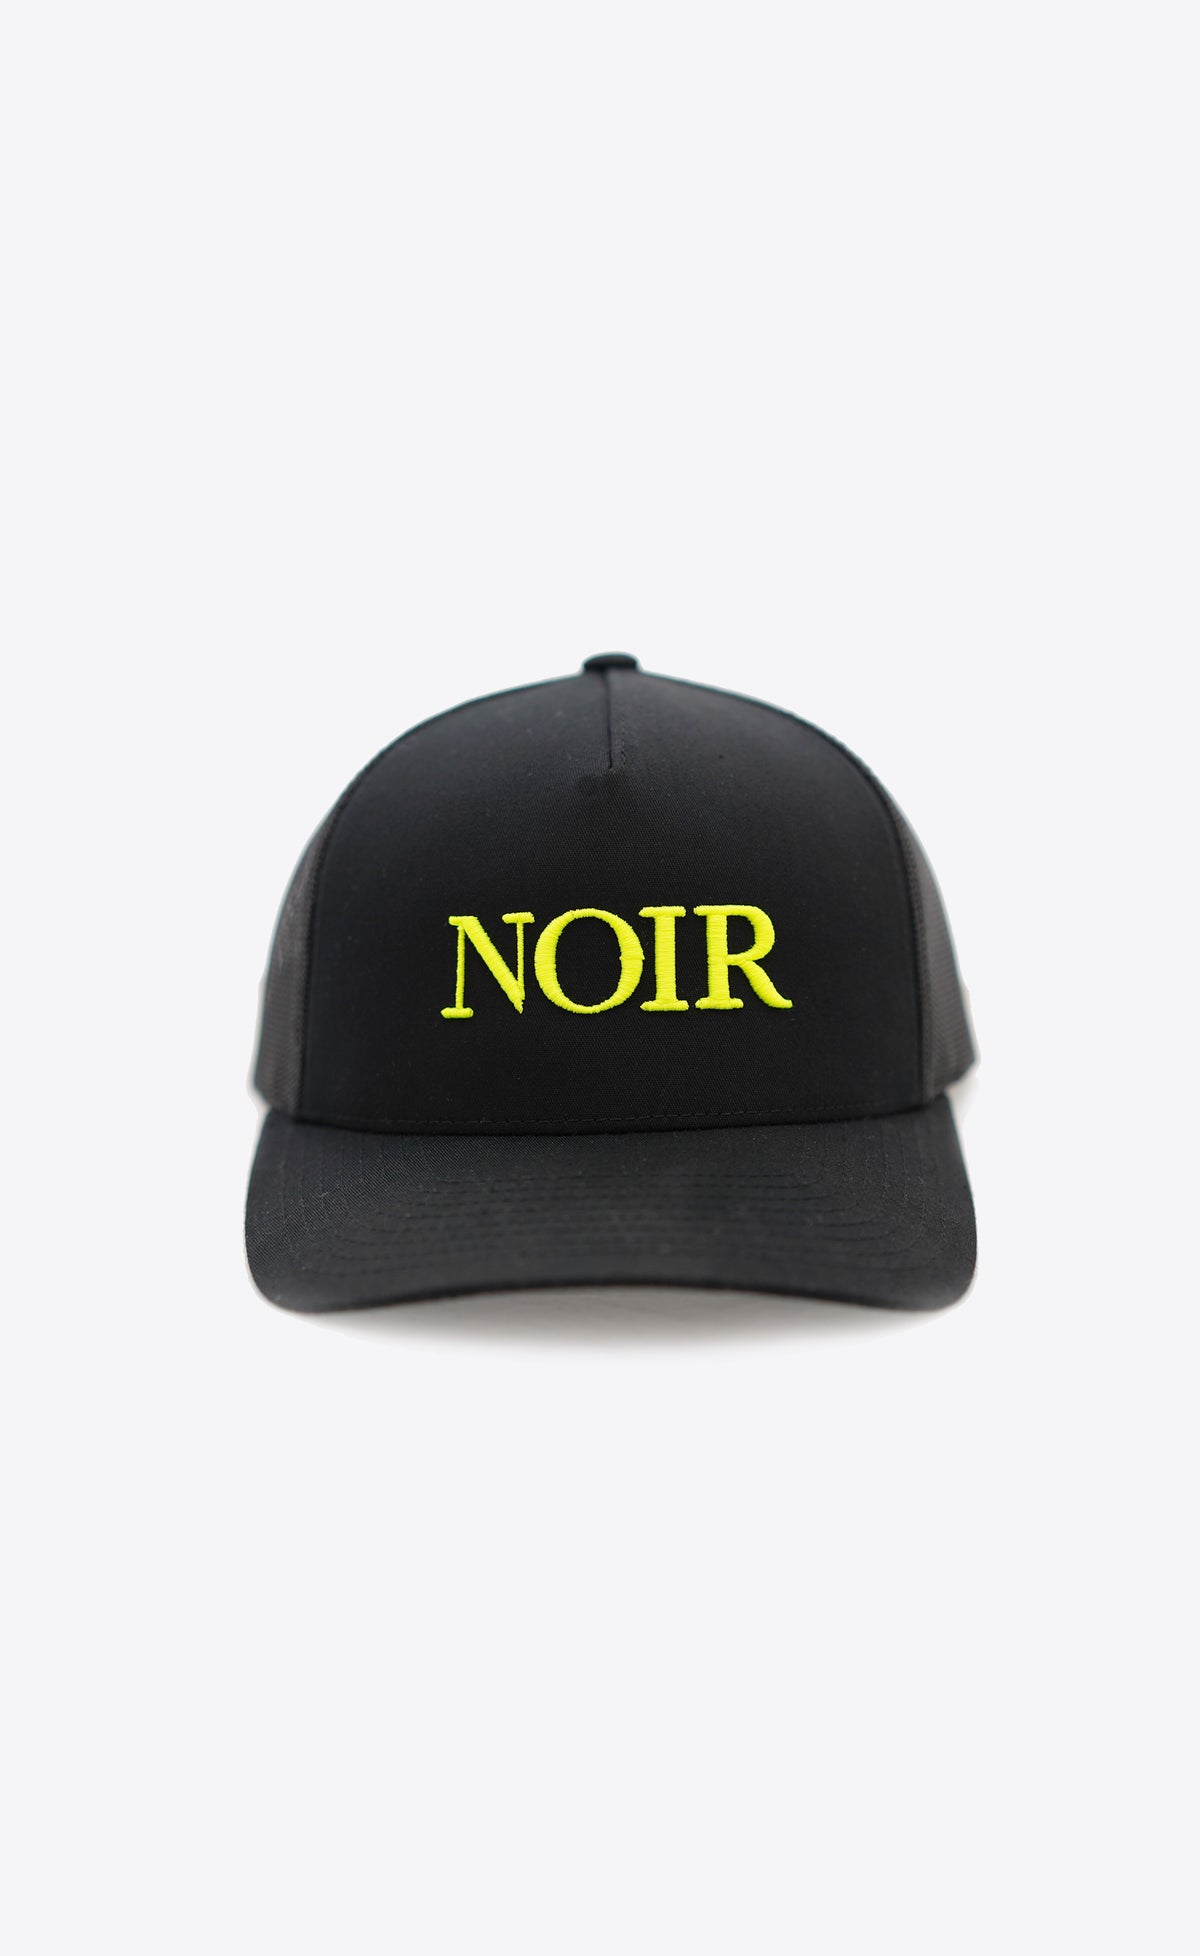 Noir Trucker Hat